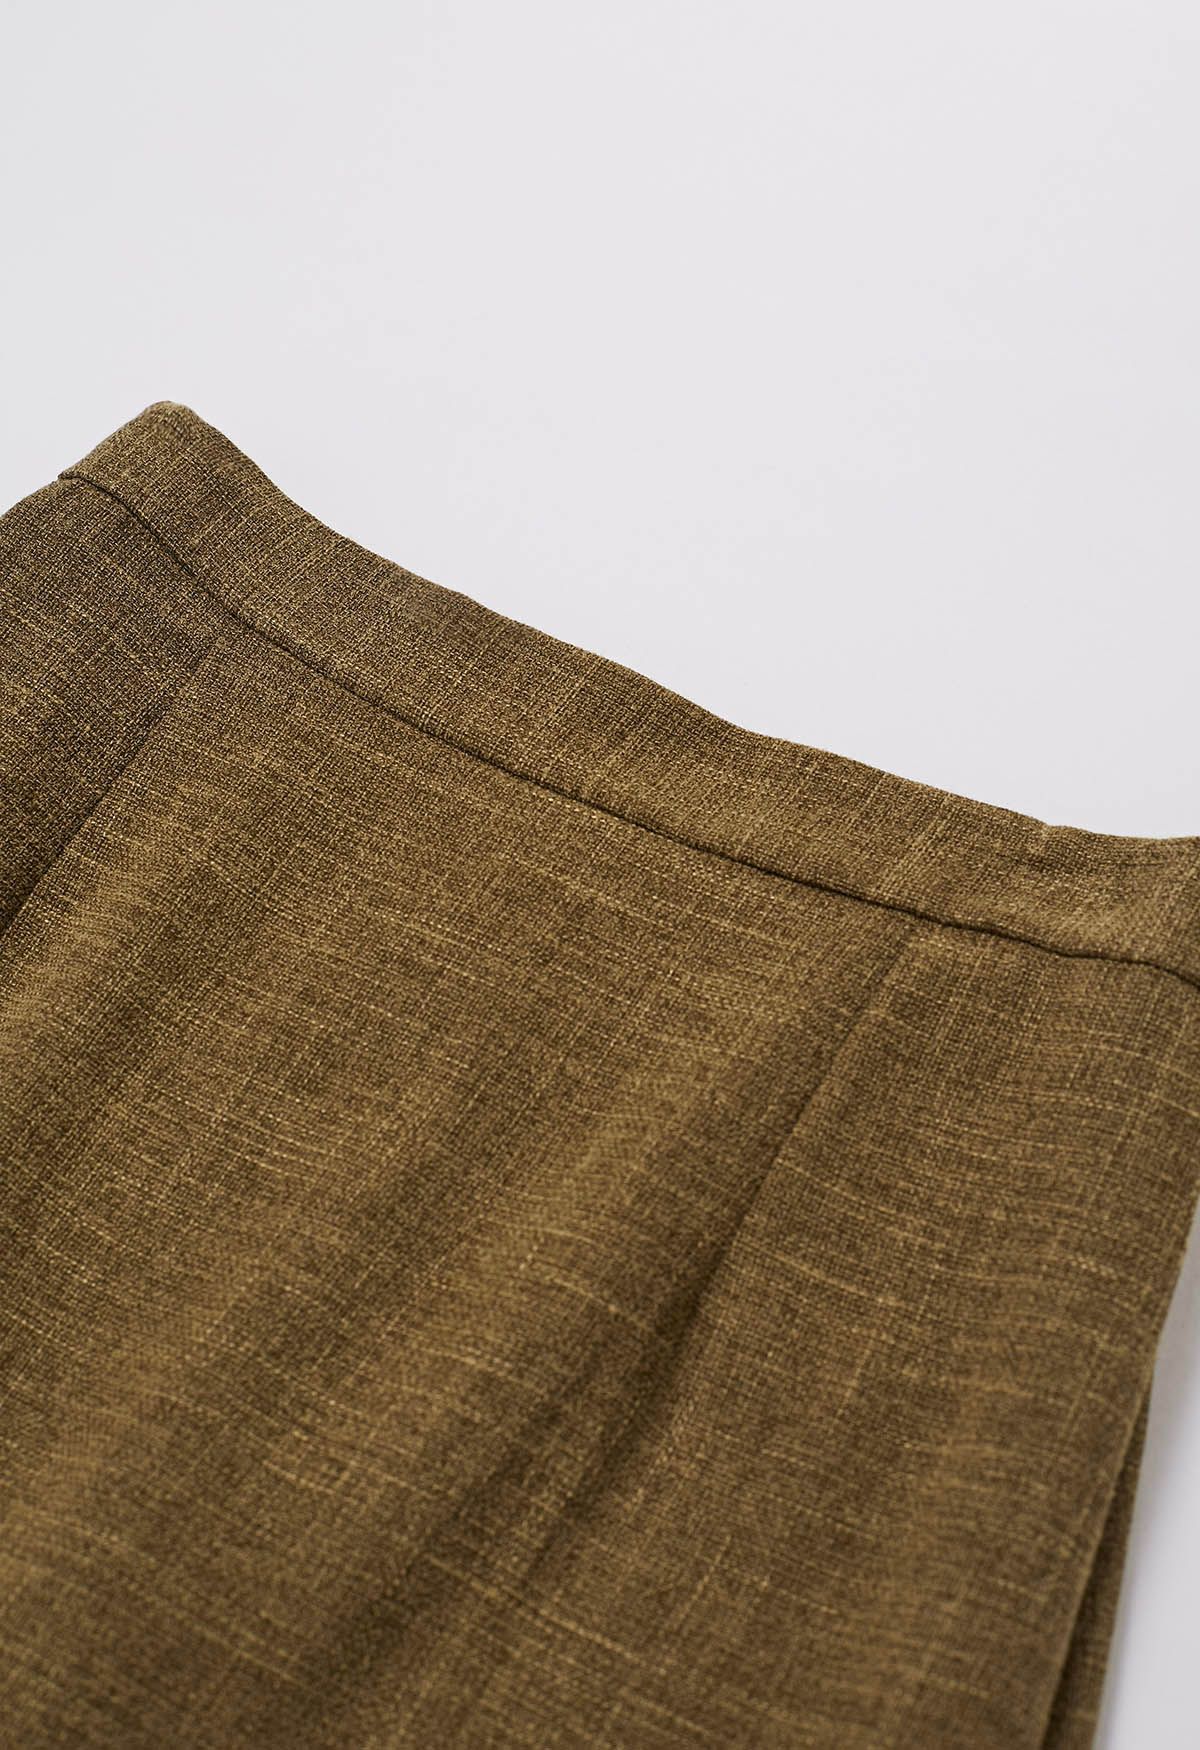 Shawl Collar Tweed Blazer and Fringe Pencil Skirt Set in Olive